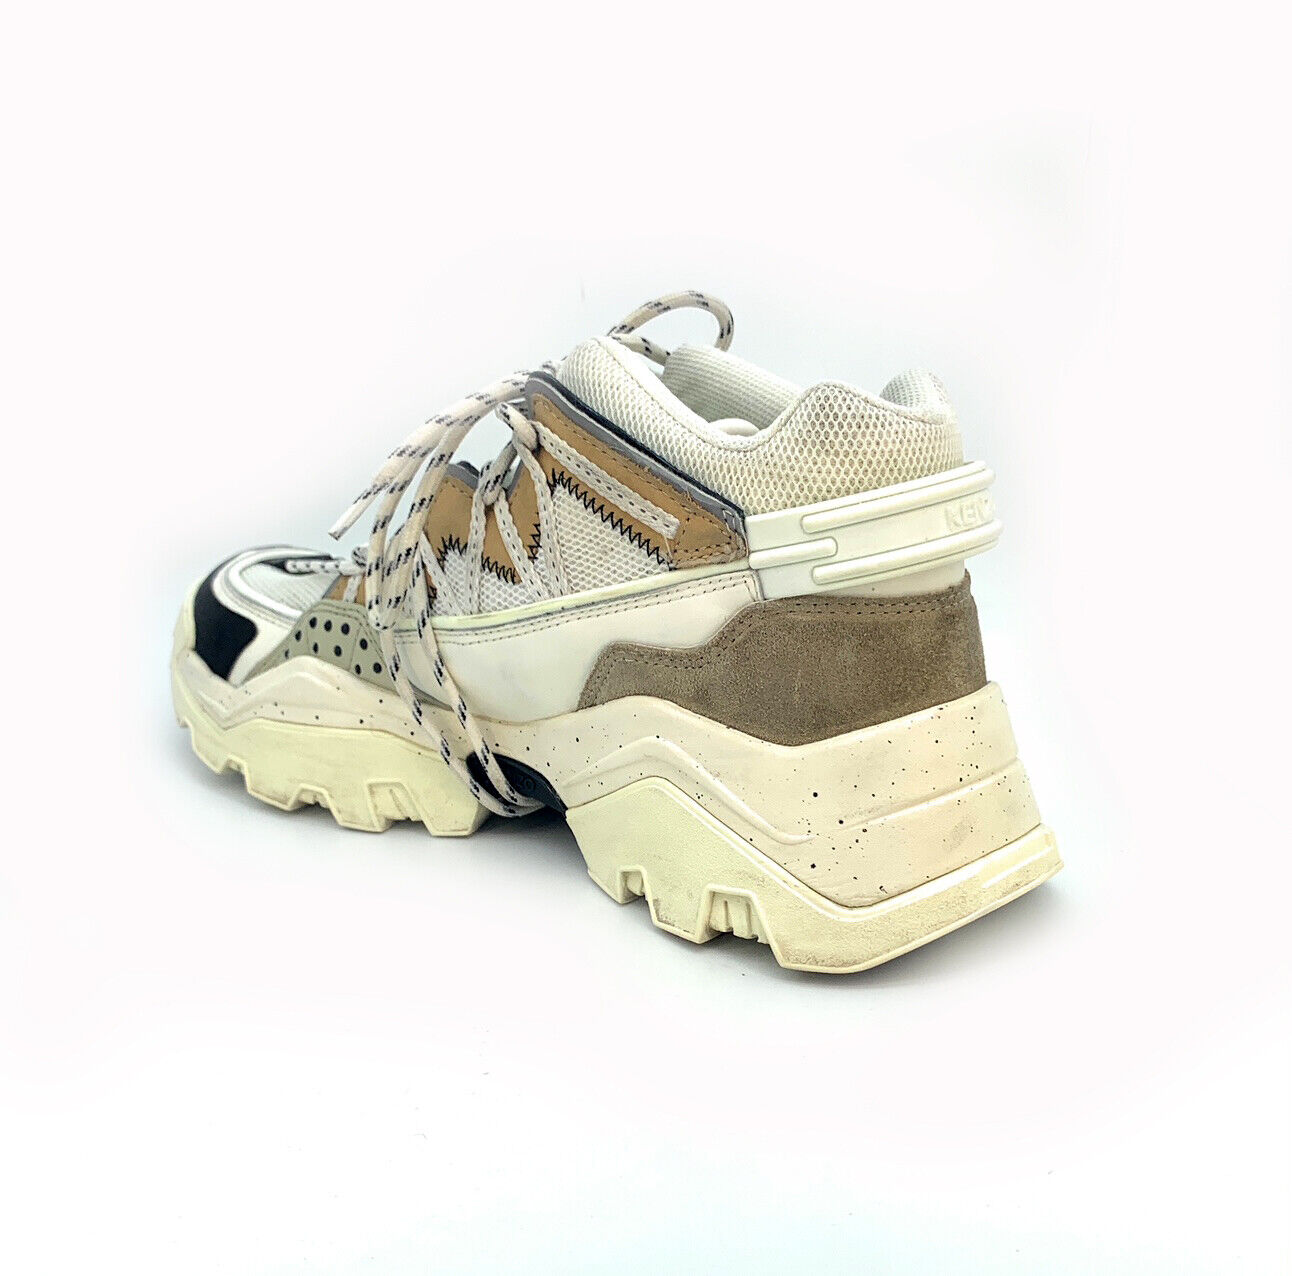 KENZO Inka low-top sneakers - Size 42 | eBay